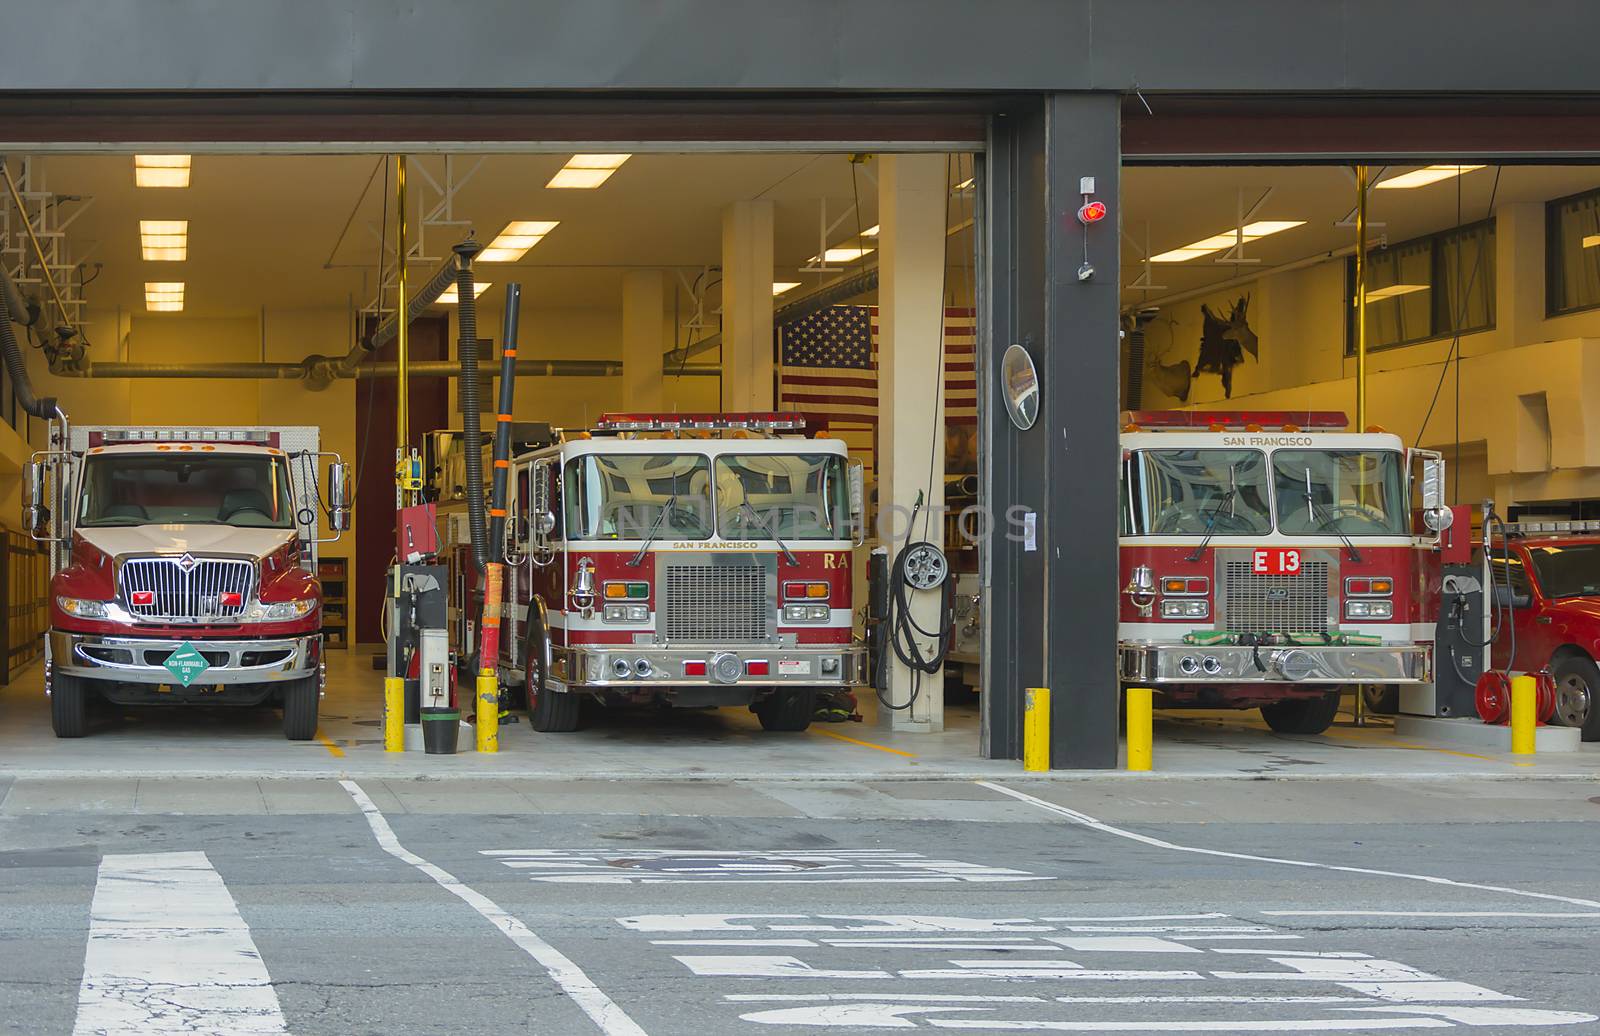 San Francisco Fire Department by rarrarorro